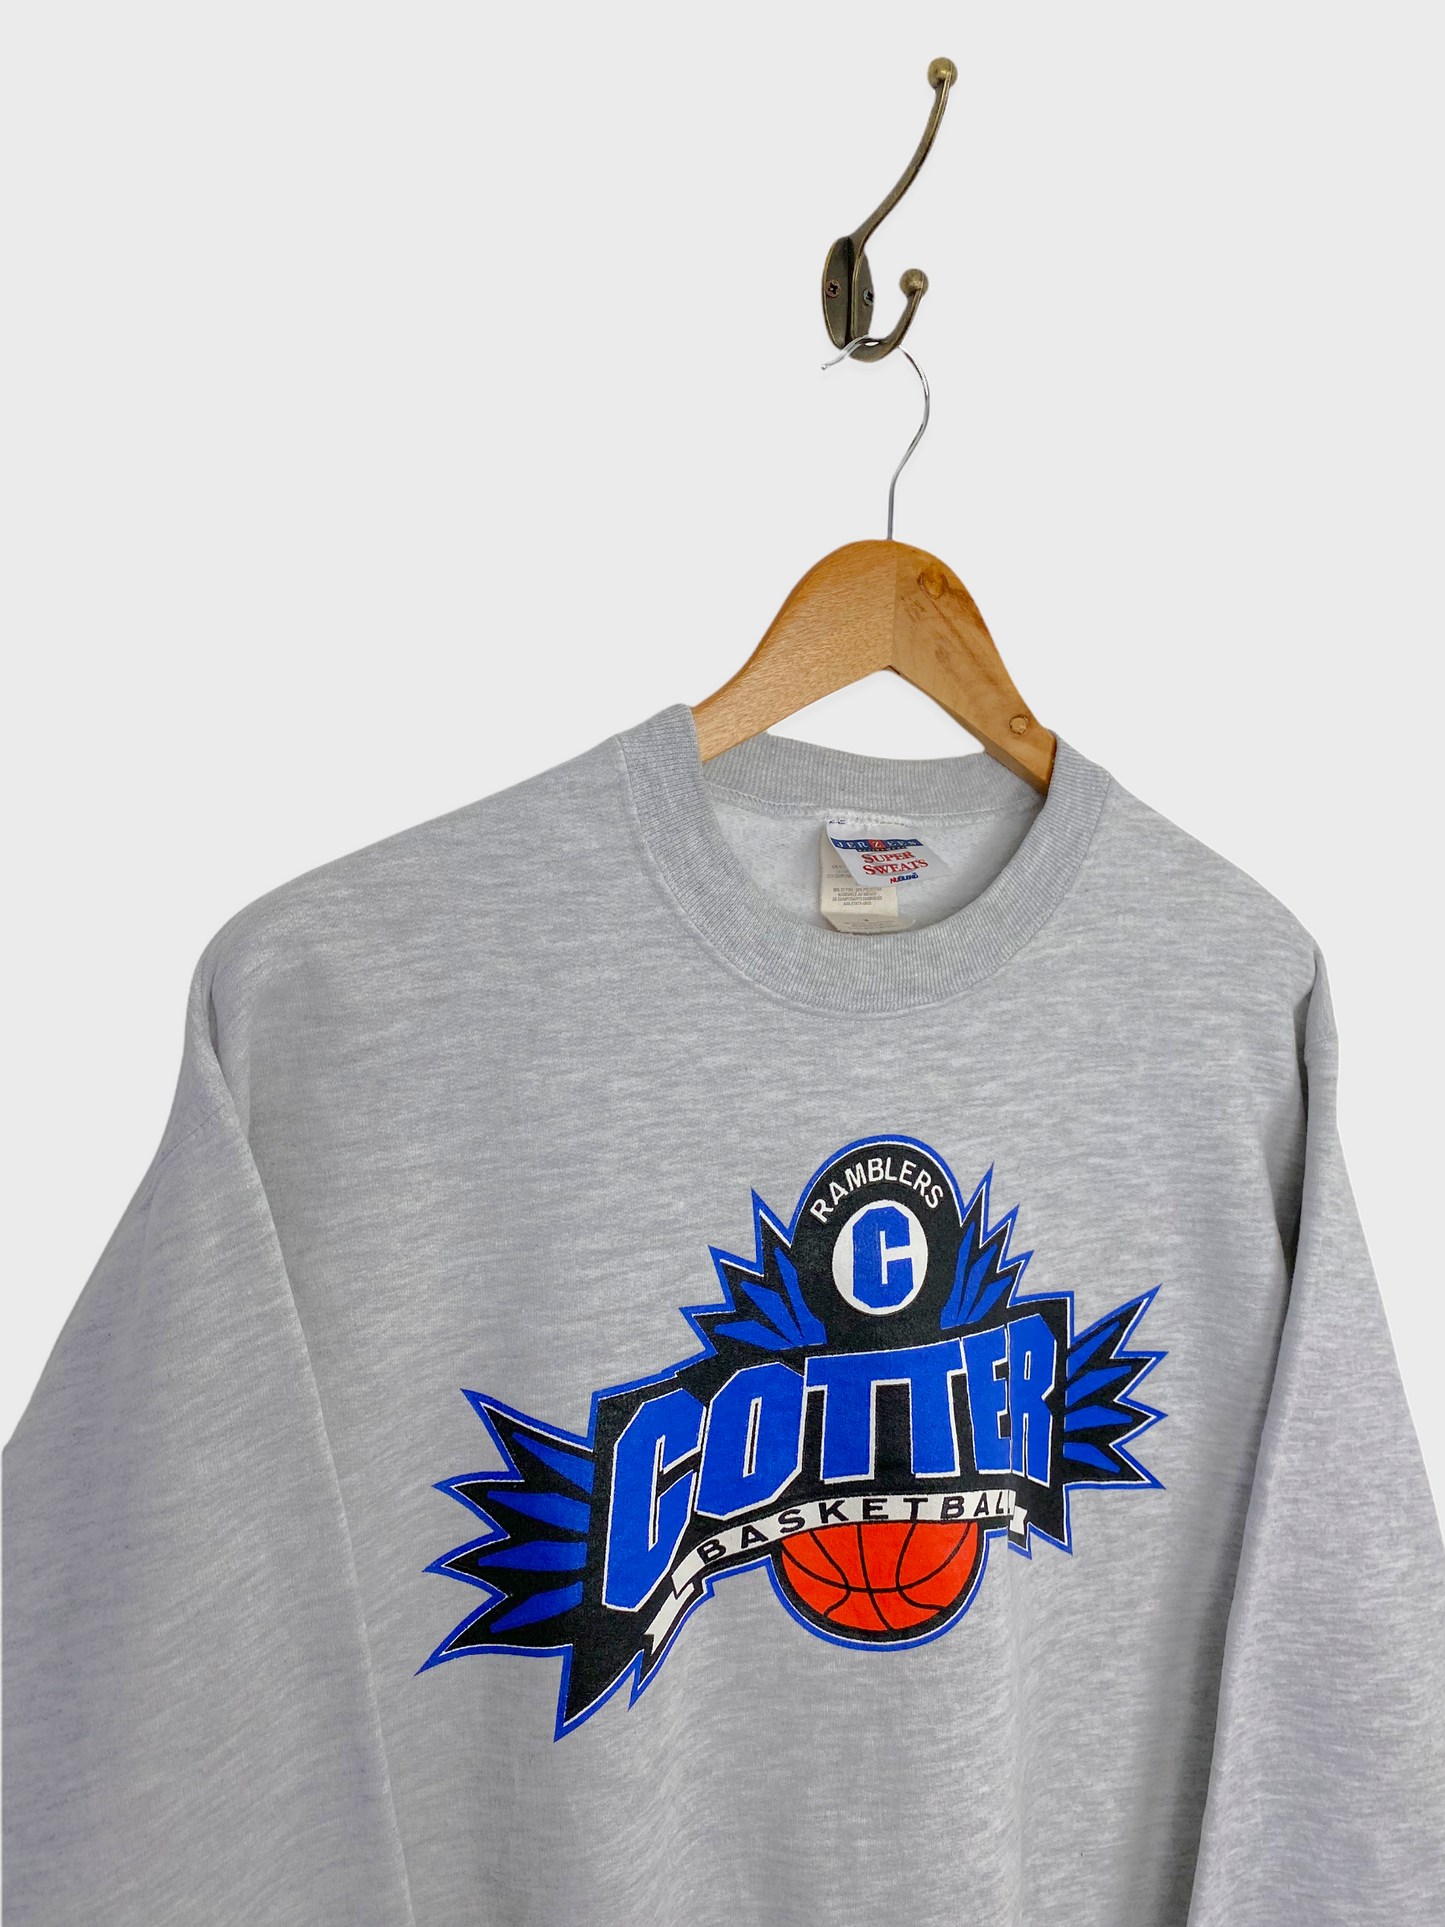 Cotter Ramblers Basketball Vintage Sweatshirt Size 8